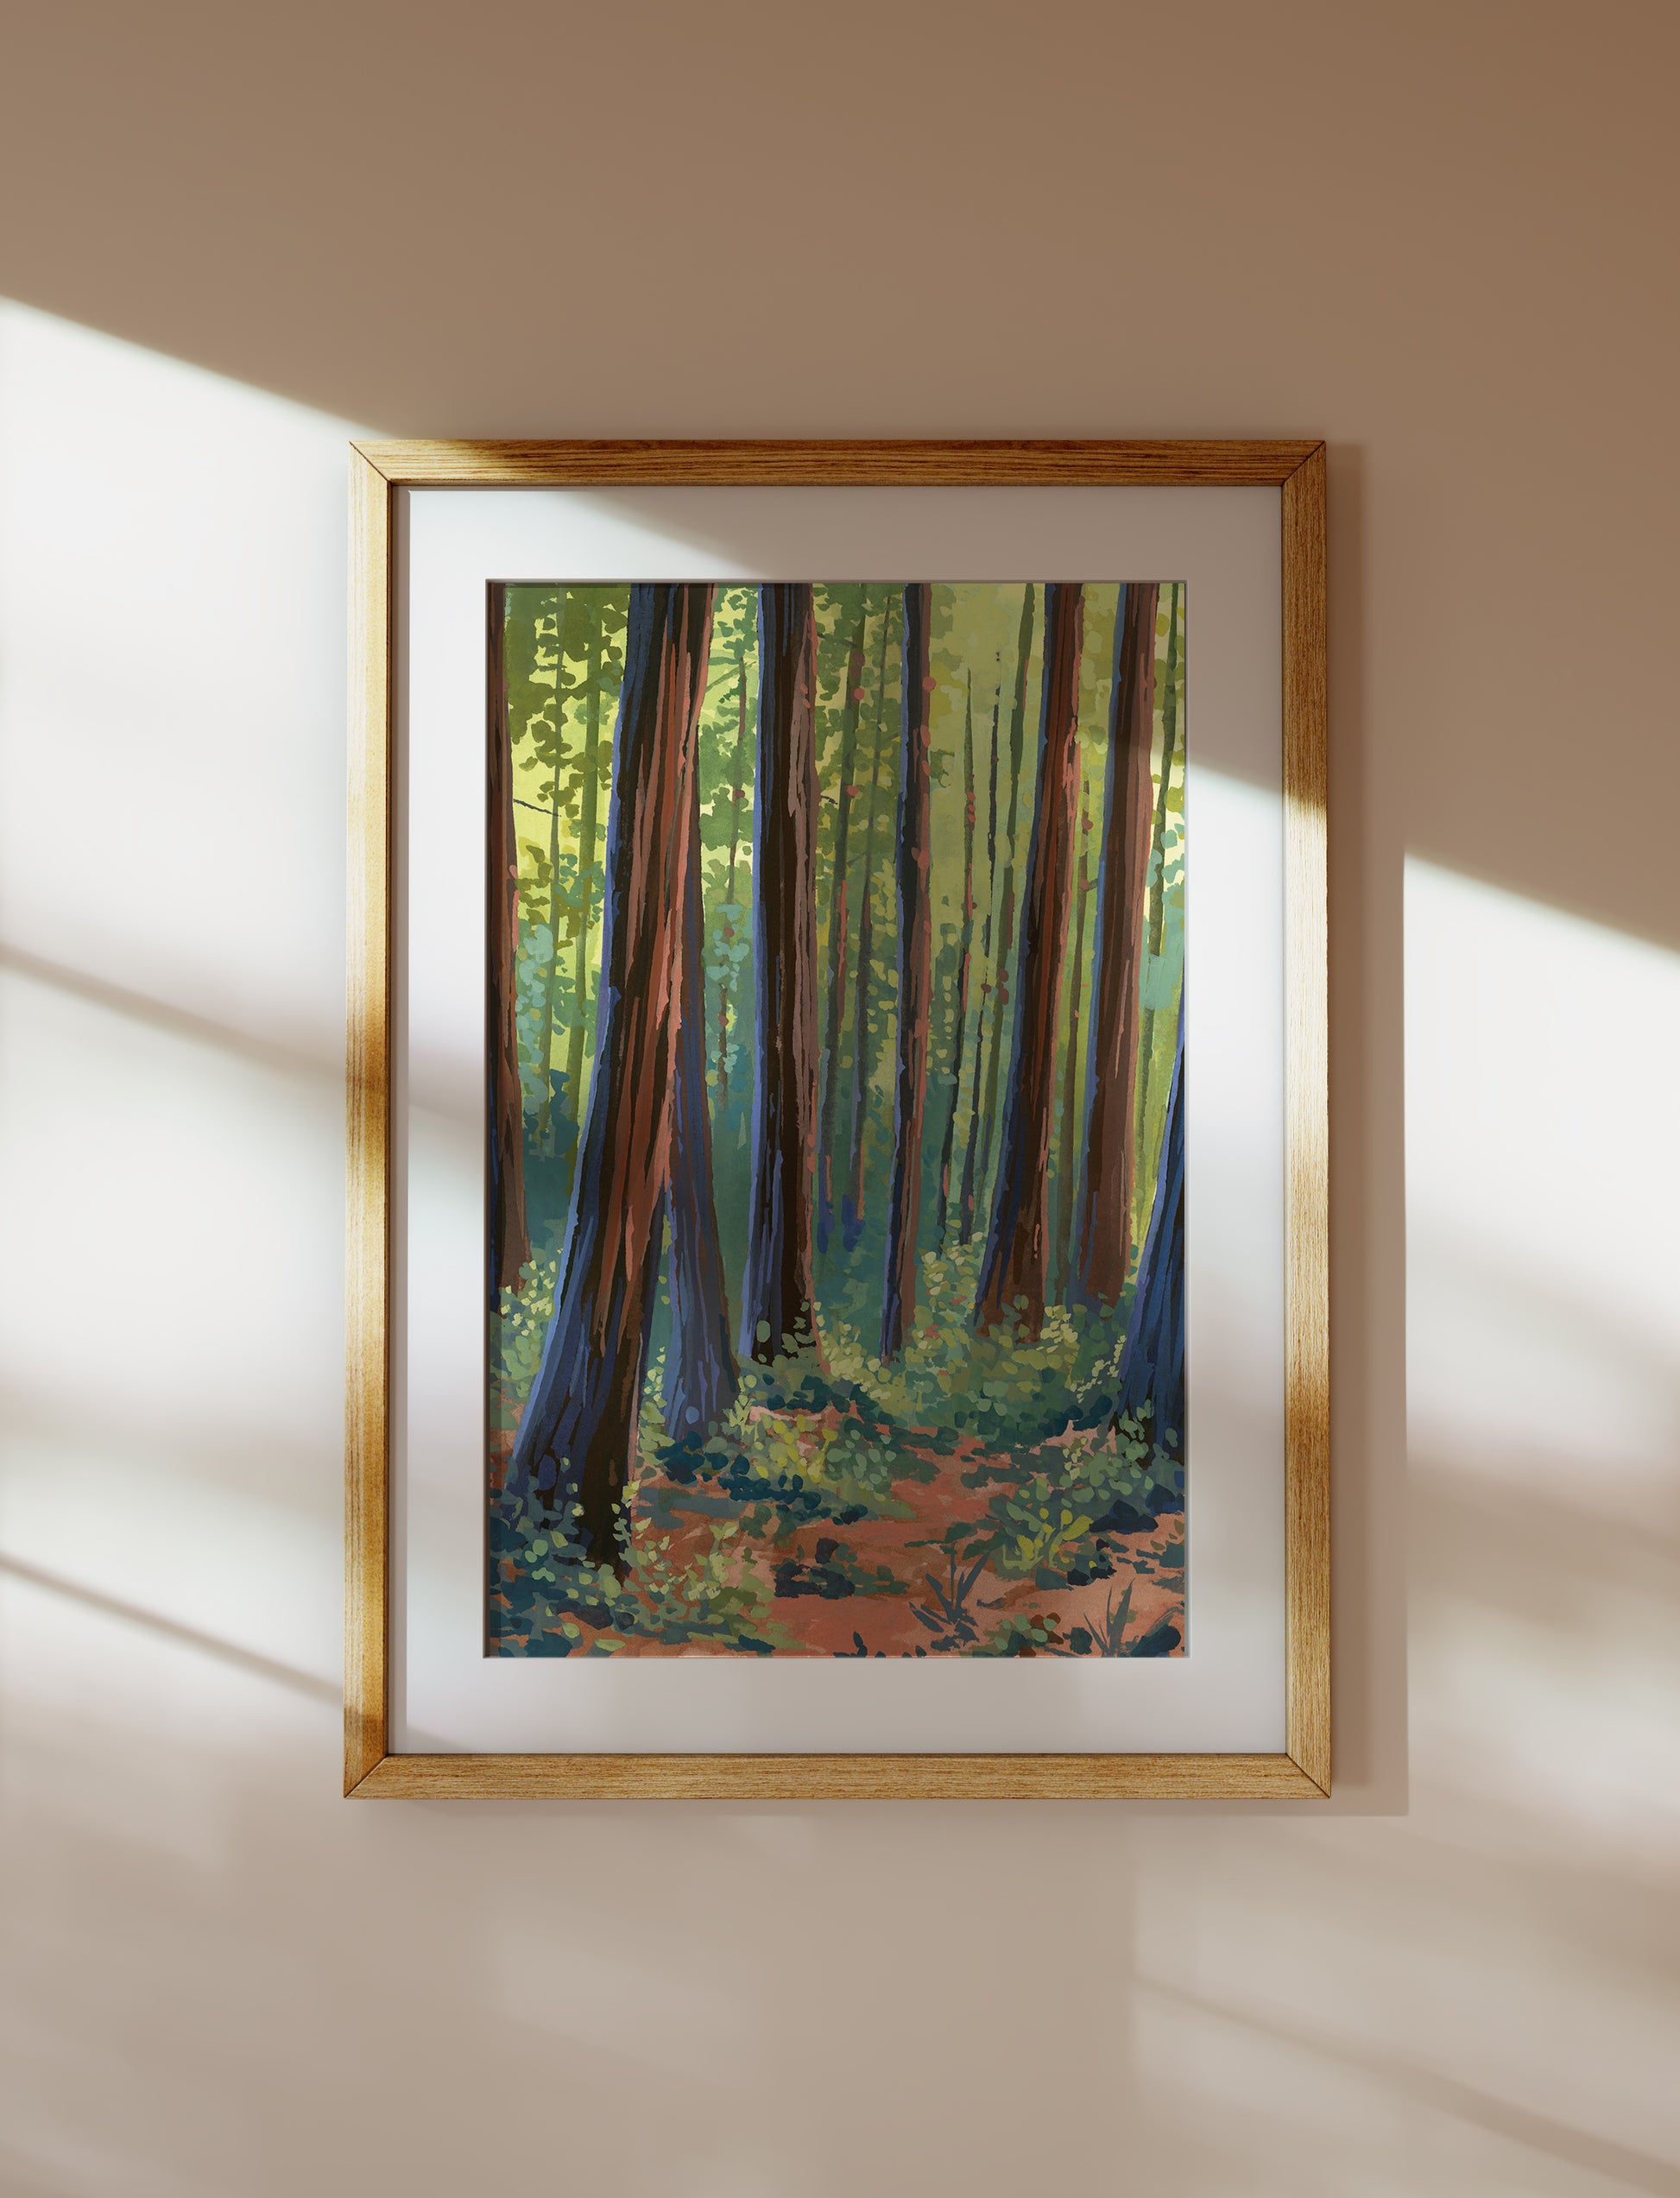 11x17 Framed Art print of redwood trees in California’s Muir Woods National Monument.